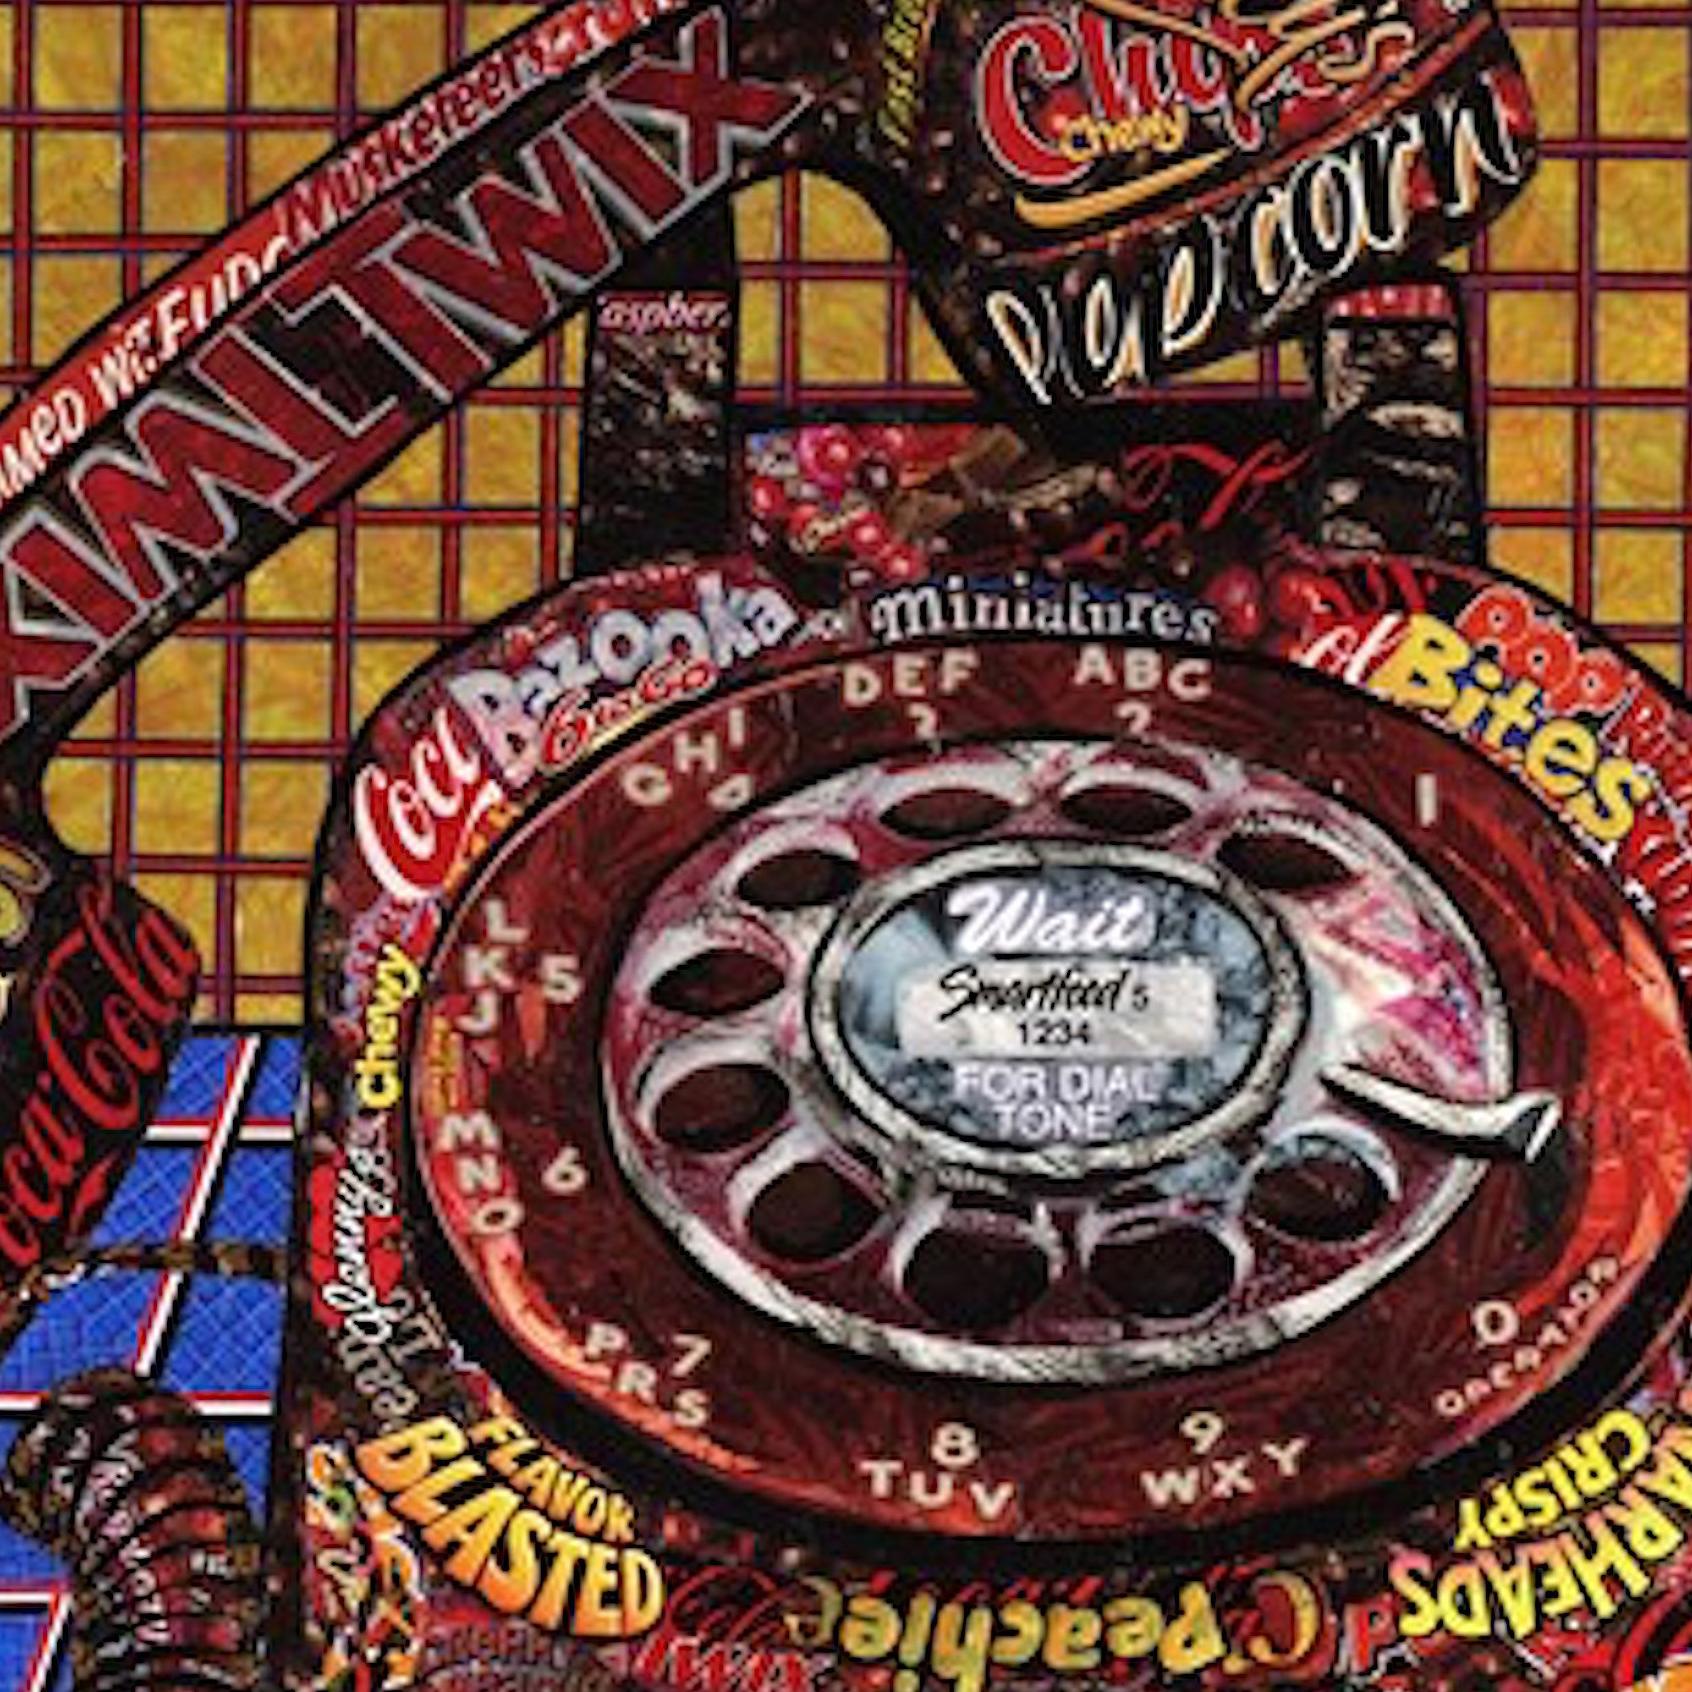 Off The Hook – Original – Teil der Candy Wrapper Collage-Serie (Pop-Art), Mixed Media Art, von Laura Benjamin